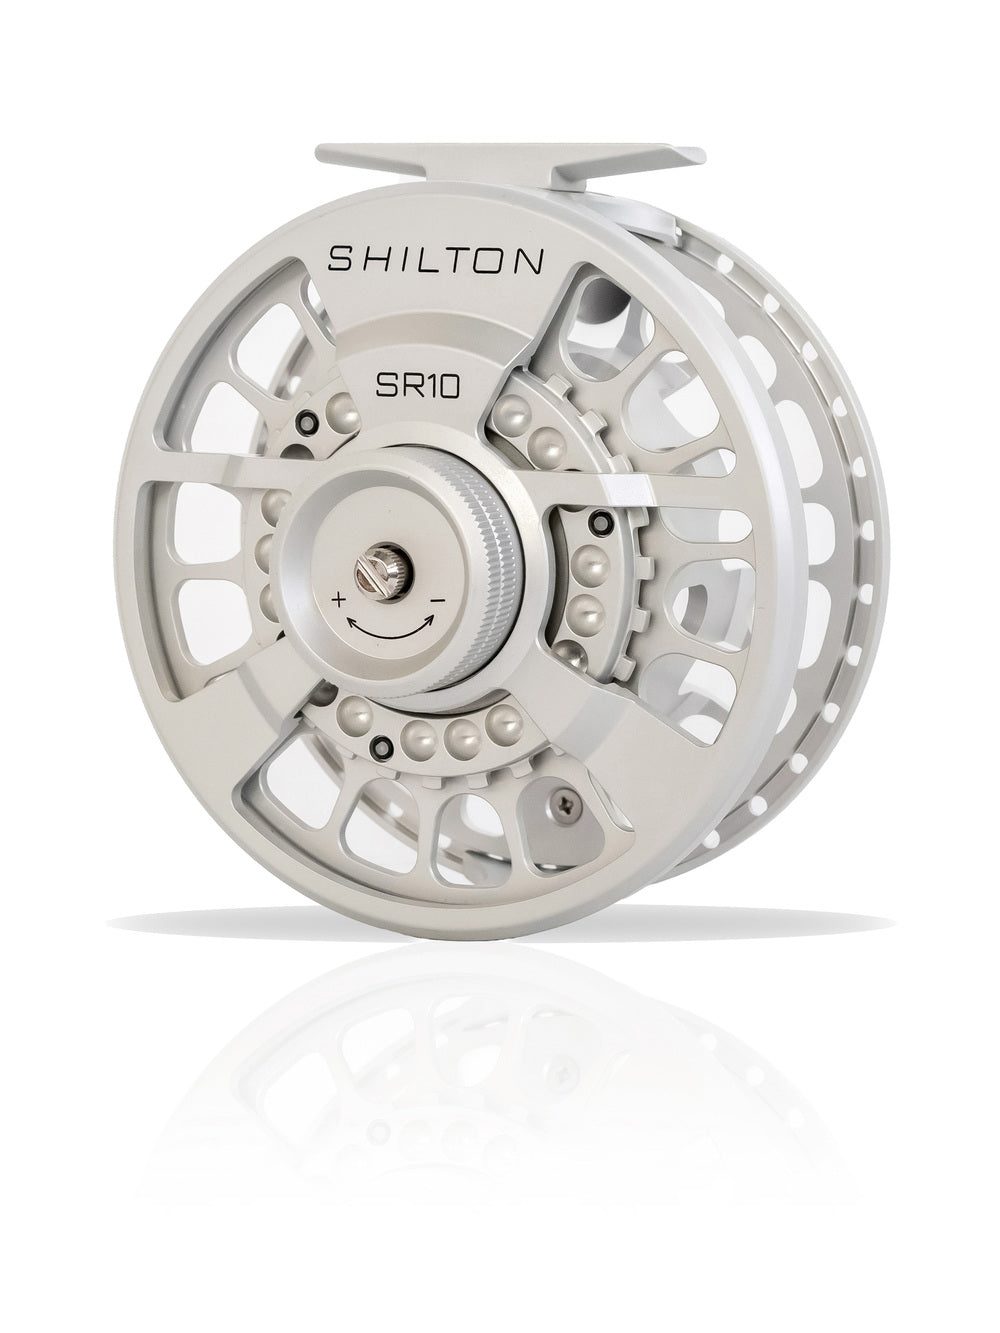 Shilton SR10 Reels (10-11wt) in Titanium Silver